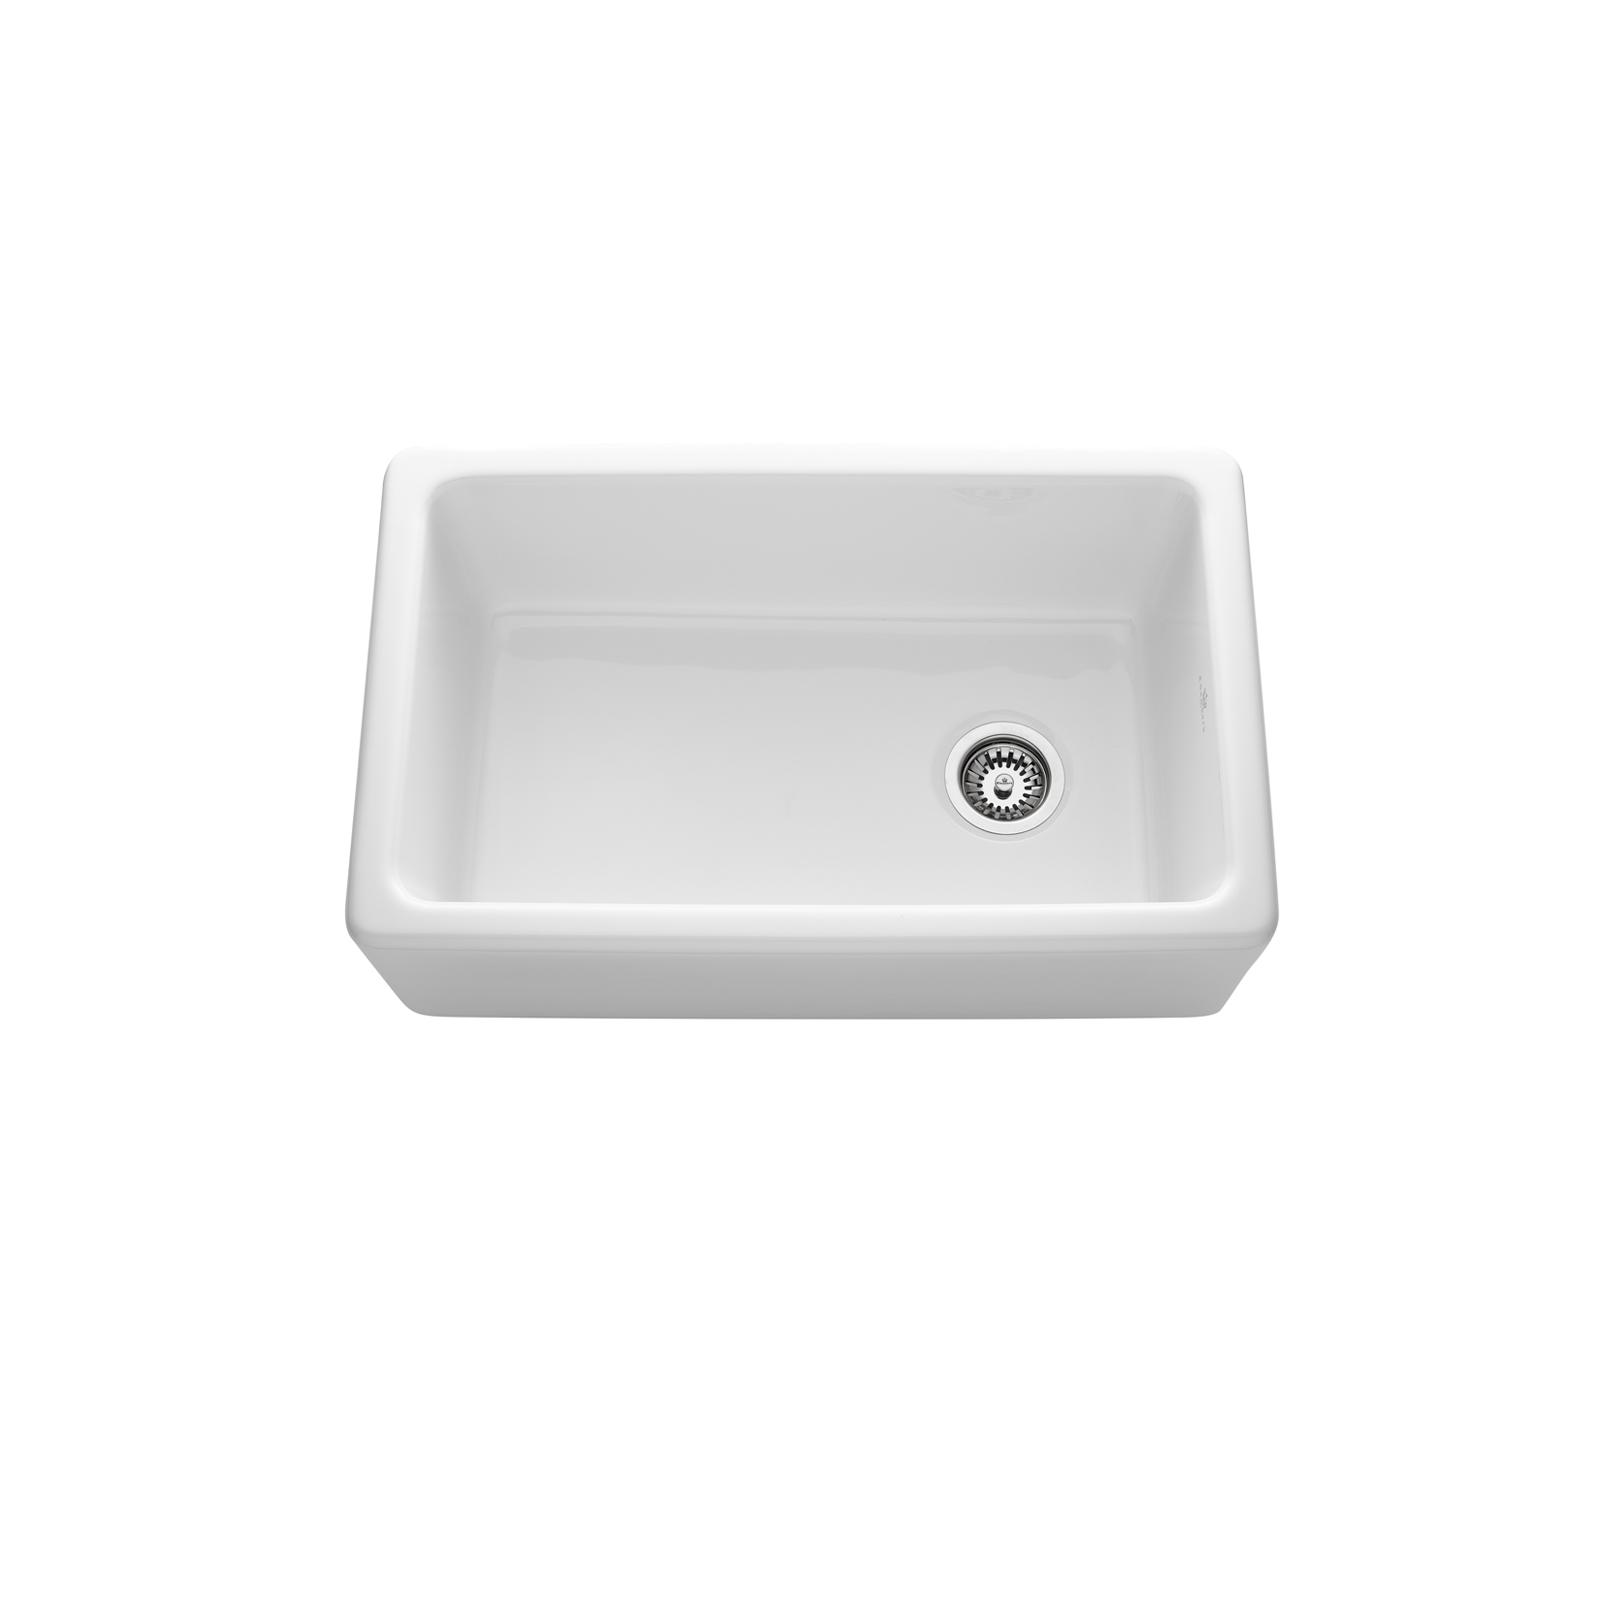 High-quality sink Philippe II - single bowl, ceramic